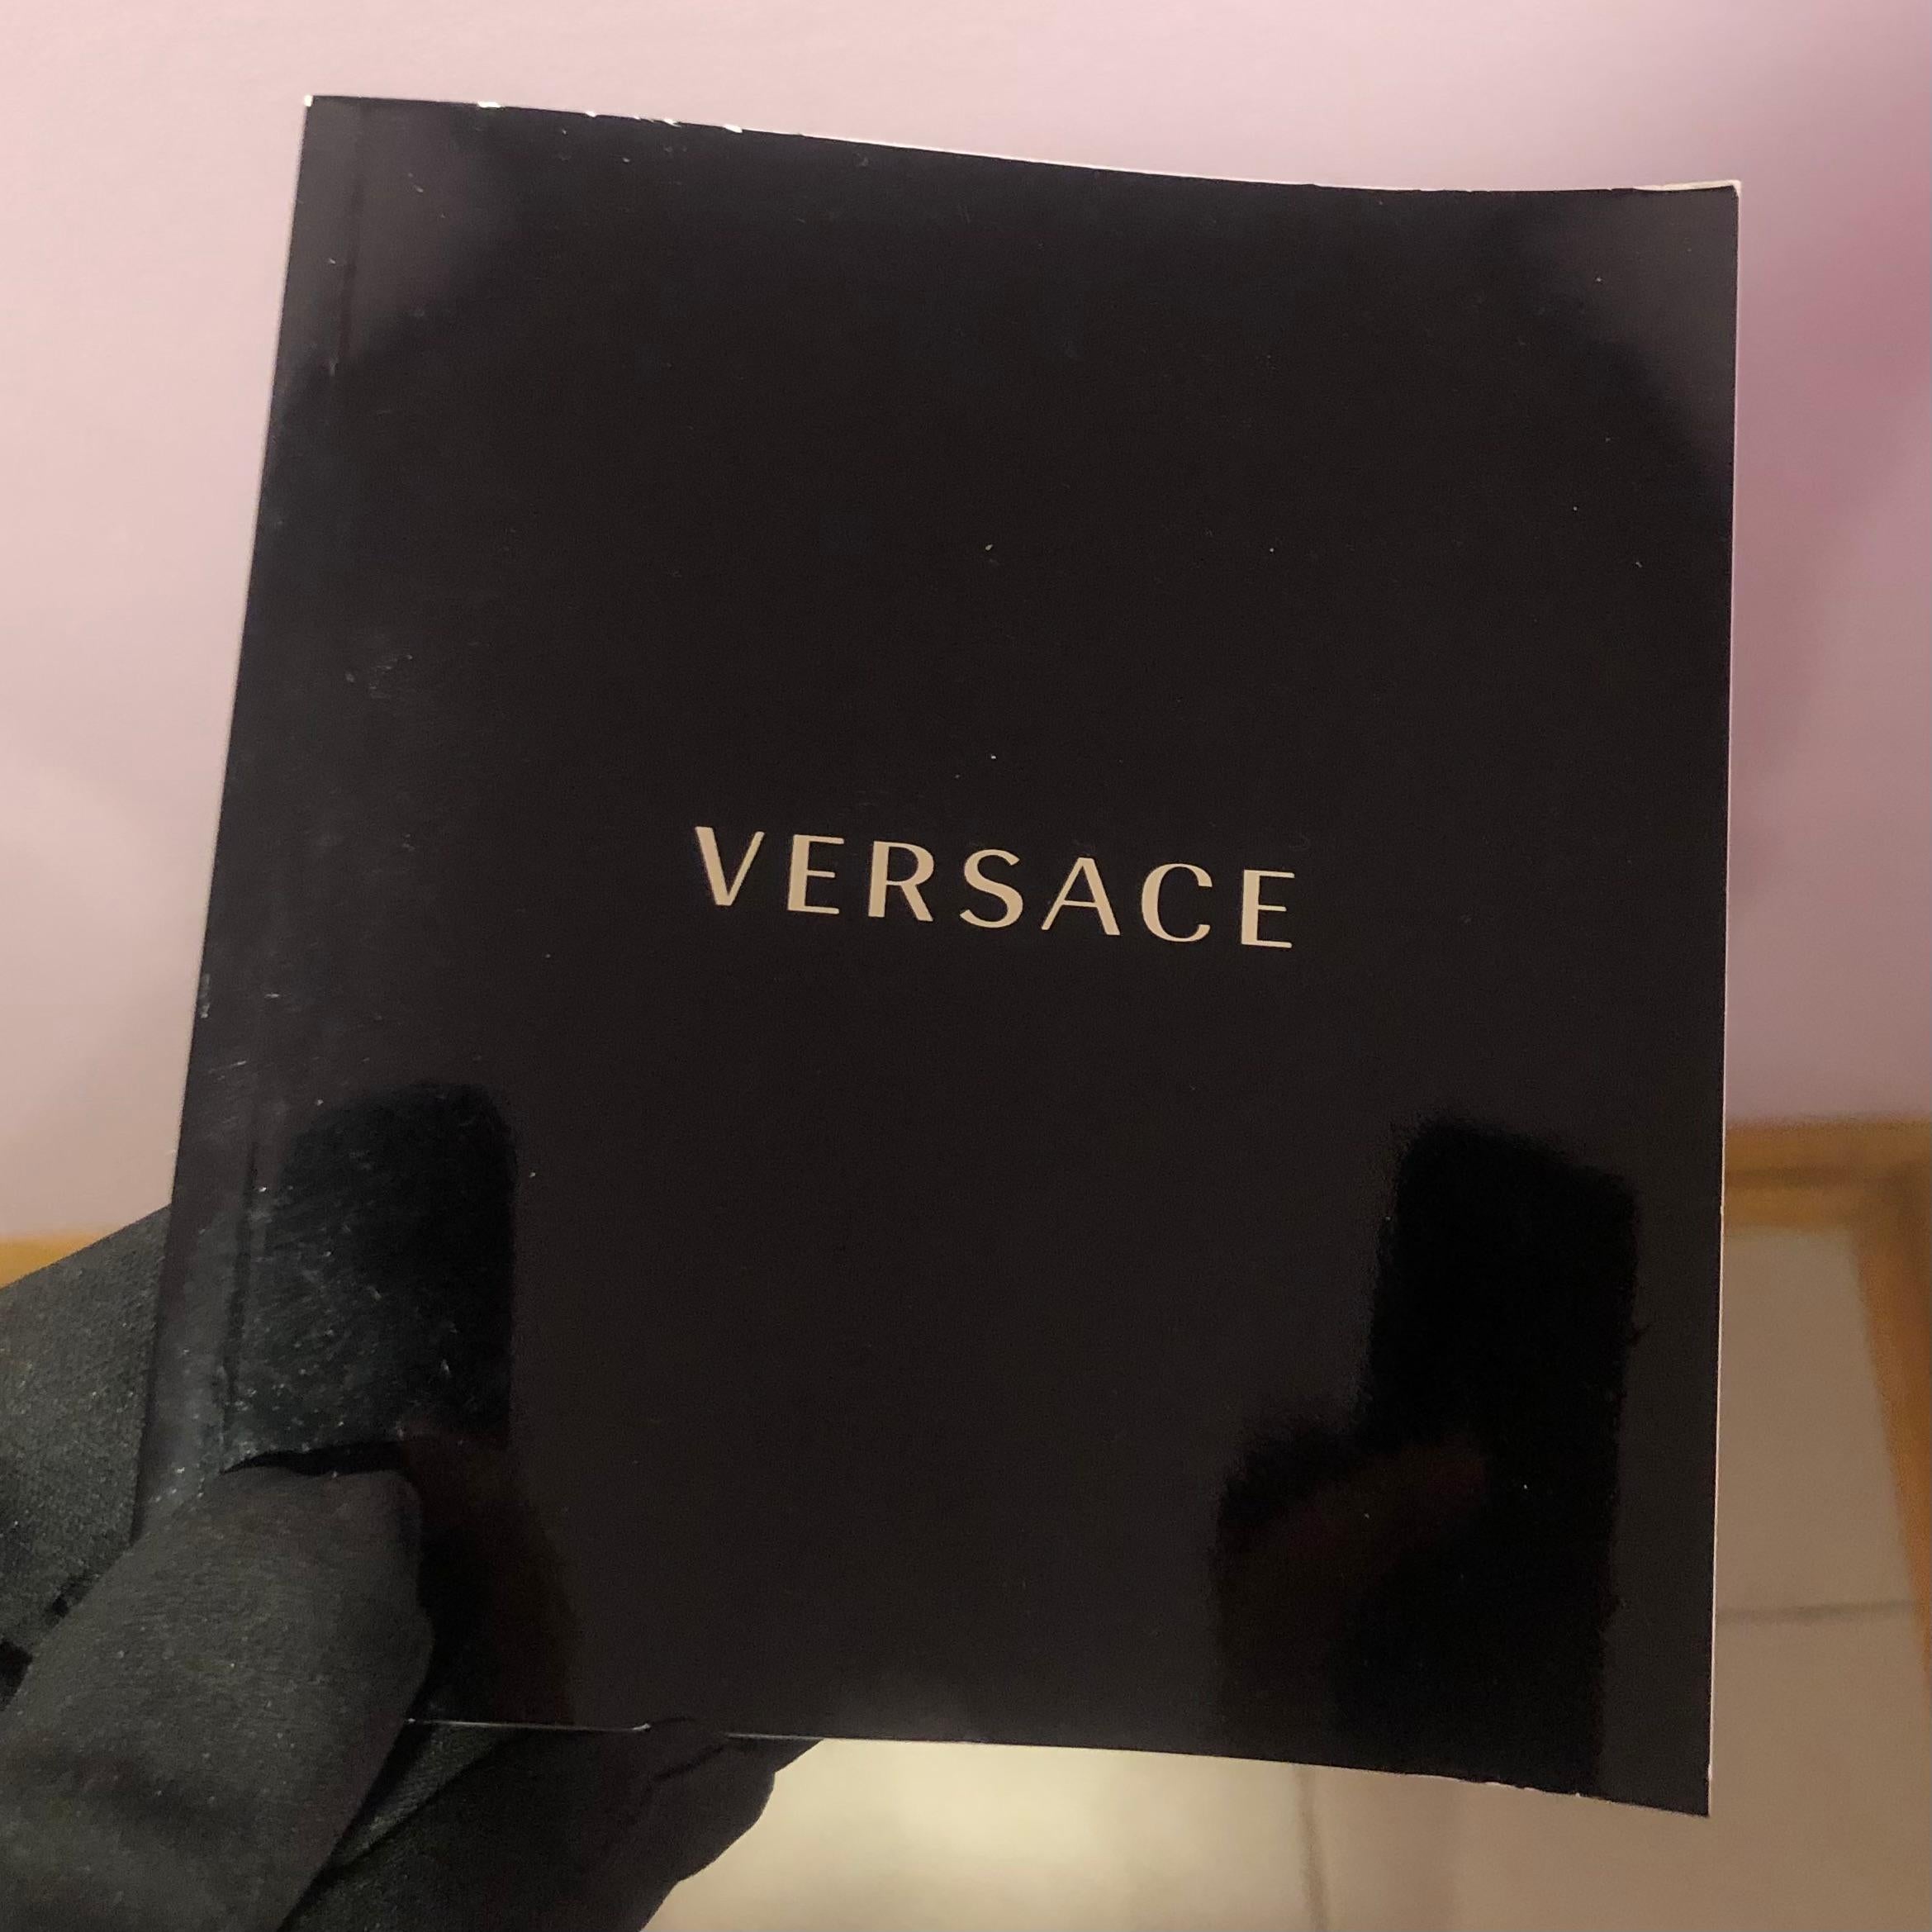 Versace Men’s 42mm Watch with Custom Diamond Iced Bezel For Sale 3